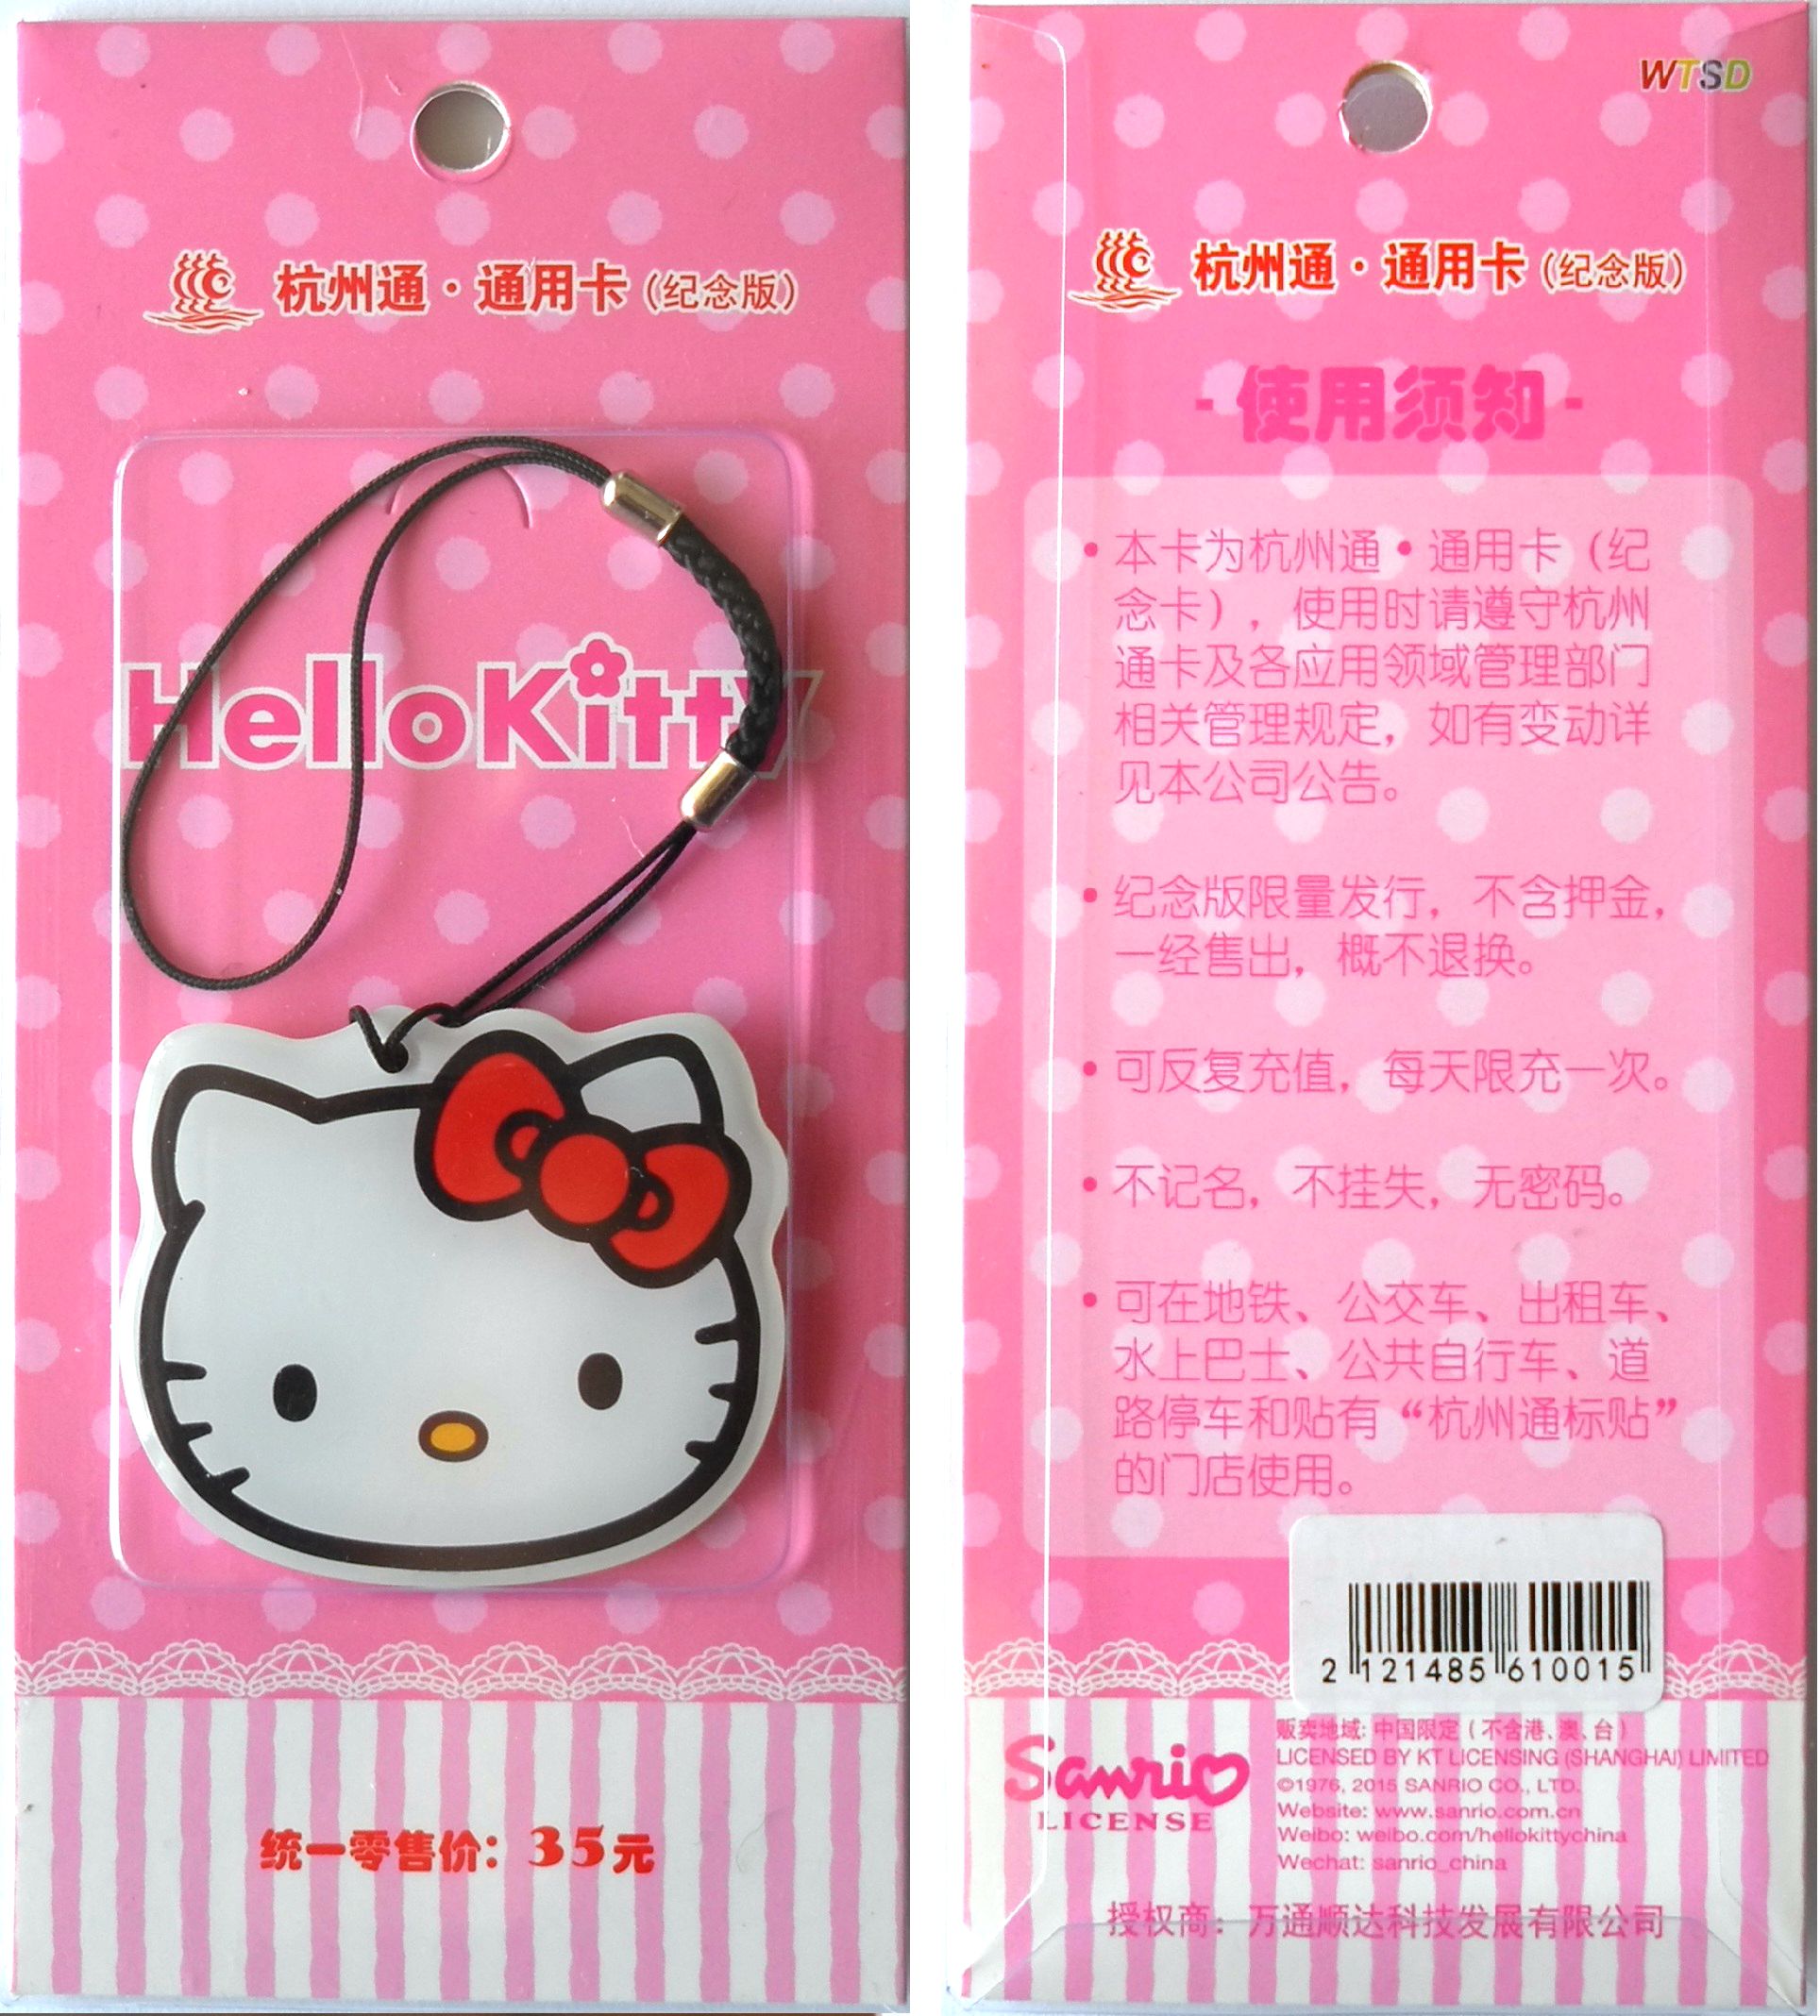 T5214, China Hangzhou Commemorative Travel Metro Card Small-Size, 2015 "Hello Kitty"